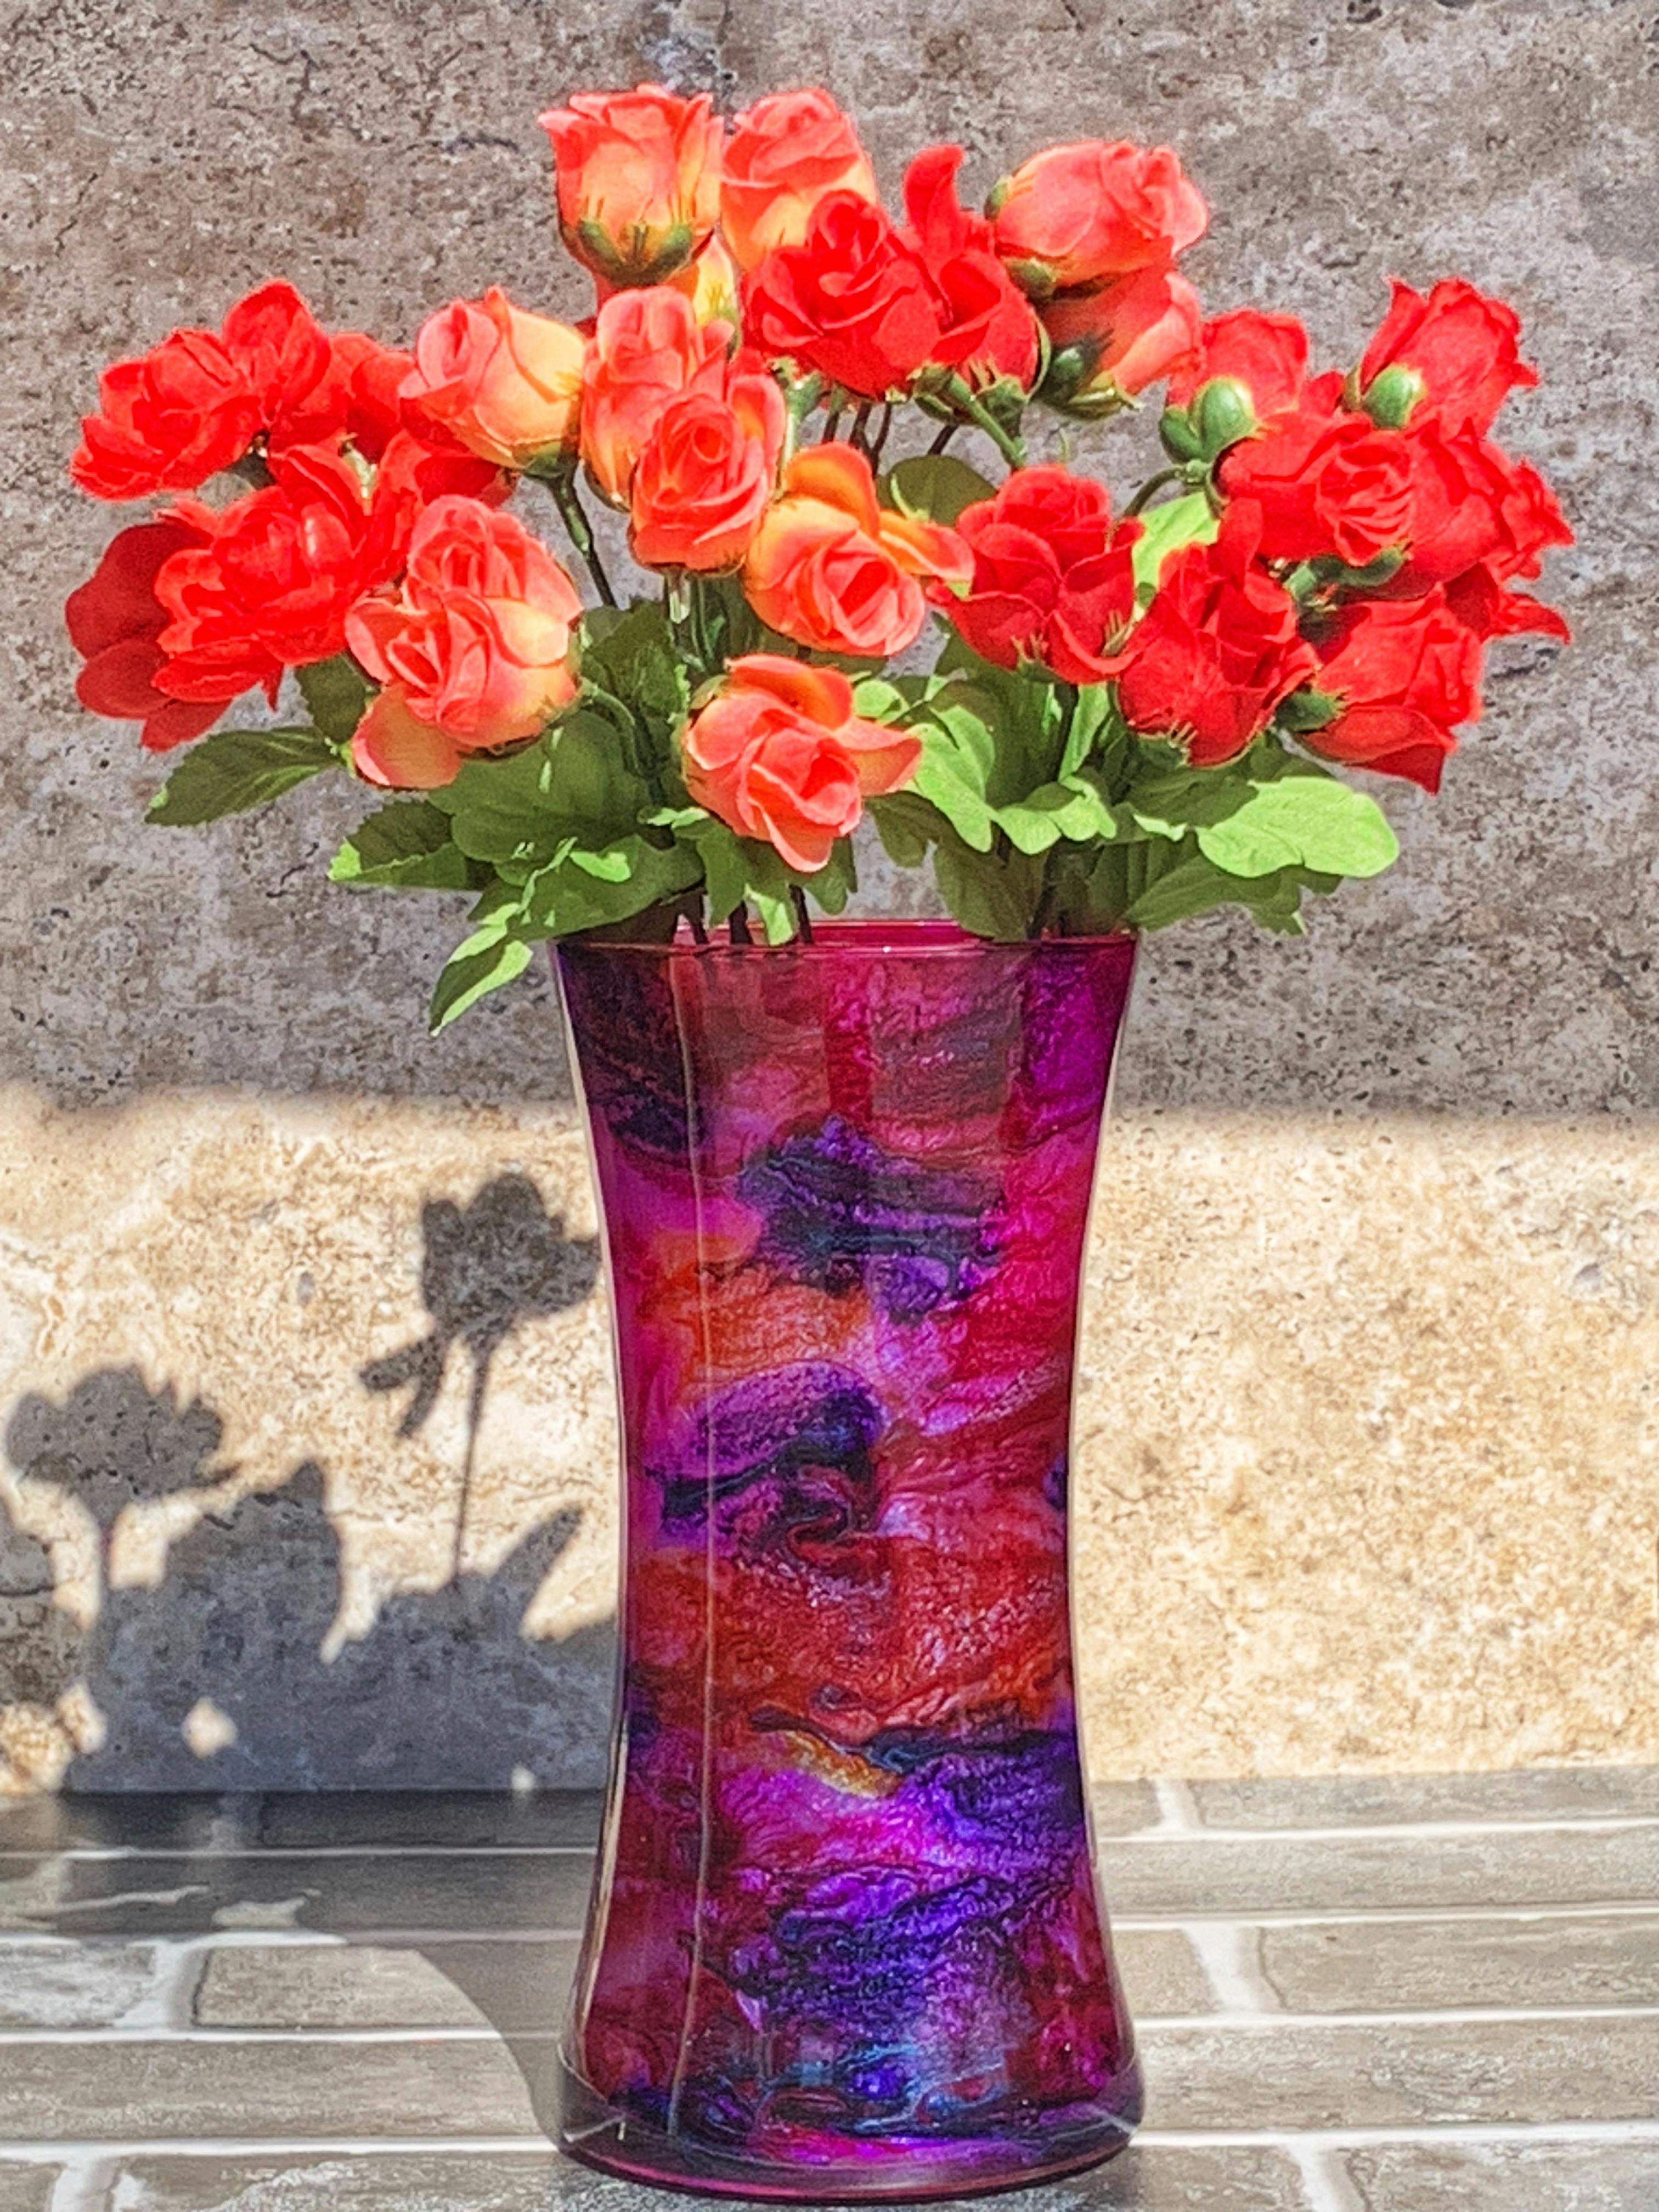 Glass vase finished with epoxy resin